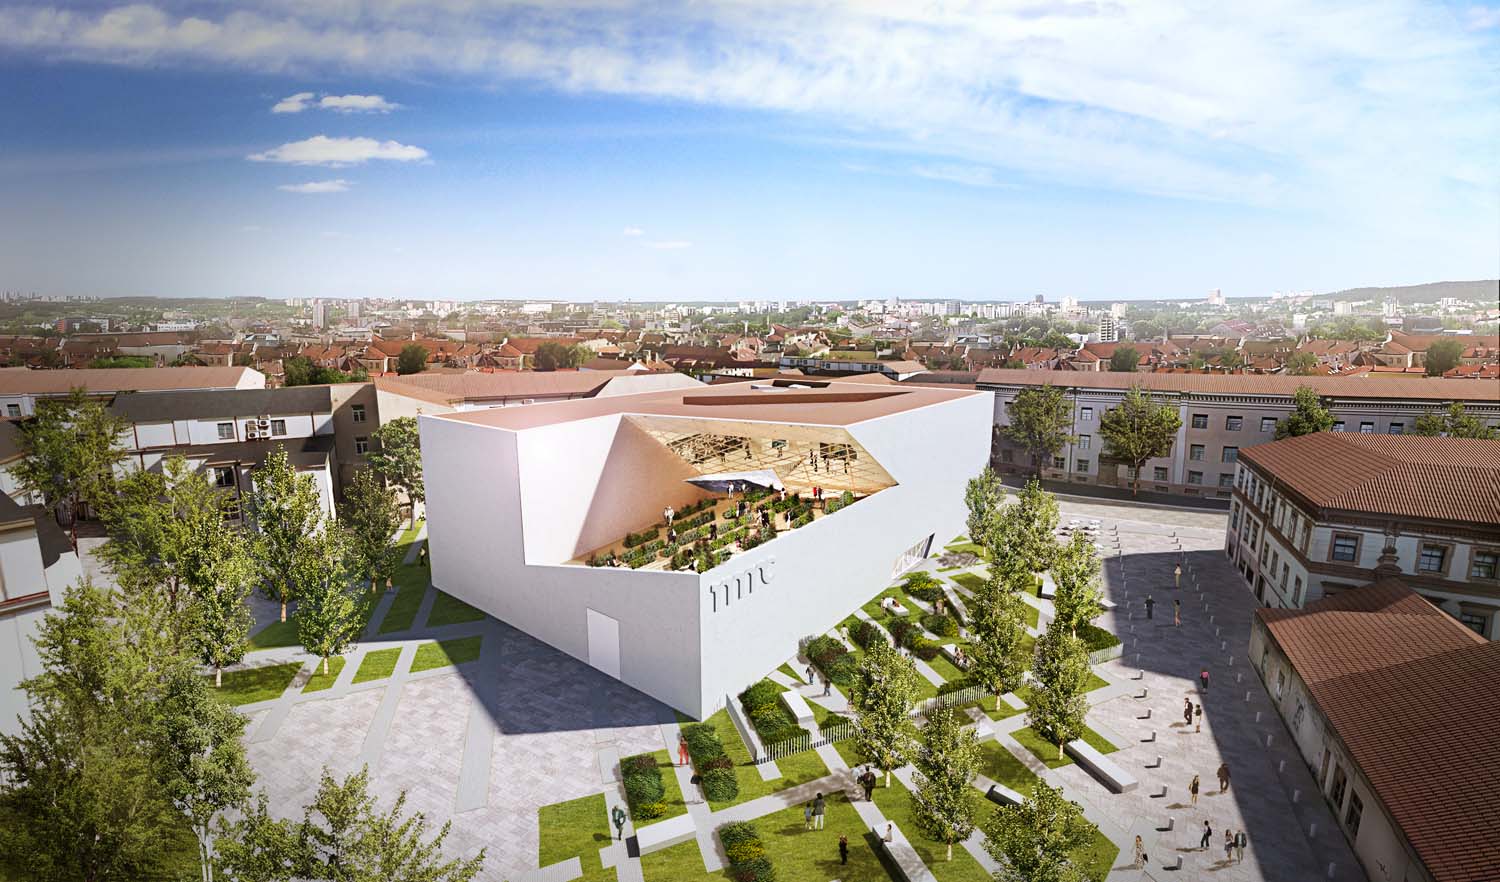 Daniel Libeskind unveils design for new Lithuanian modern art museum